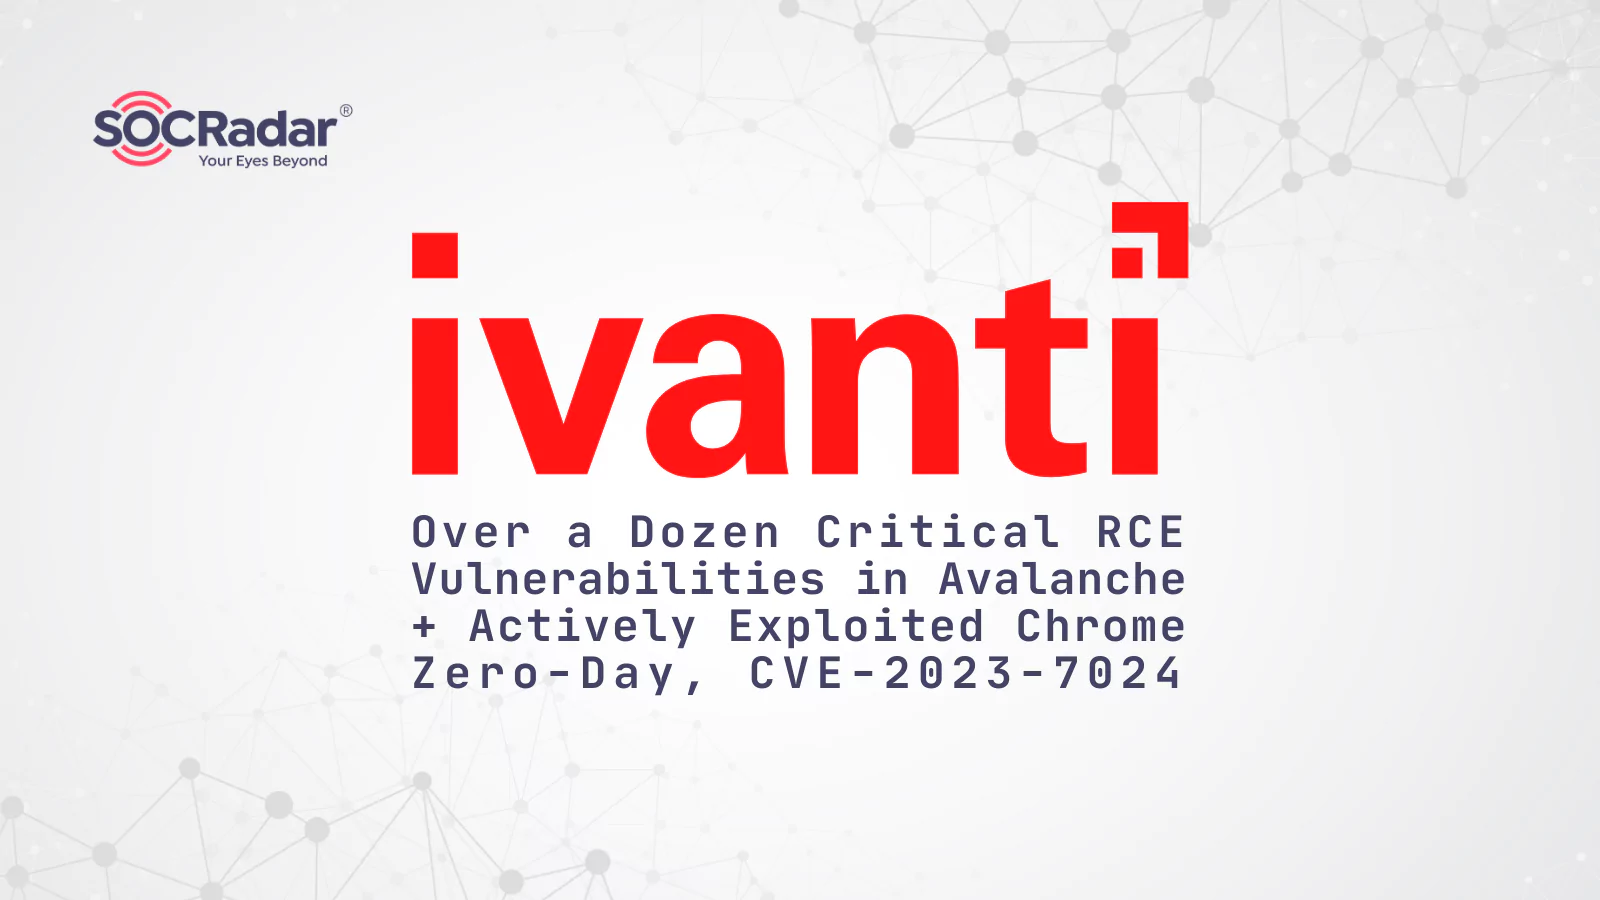 SOCRadar® Cyber Intelligence Inc. | Over a Dozen Critical RCE Vulnerabilities in Ivanti Avalanche; Actively Exploited Chrome Zero-Day, CVE-2023-7024